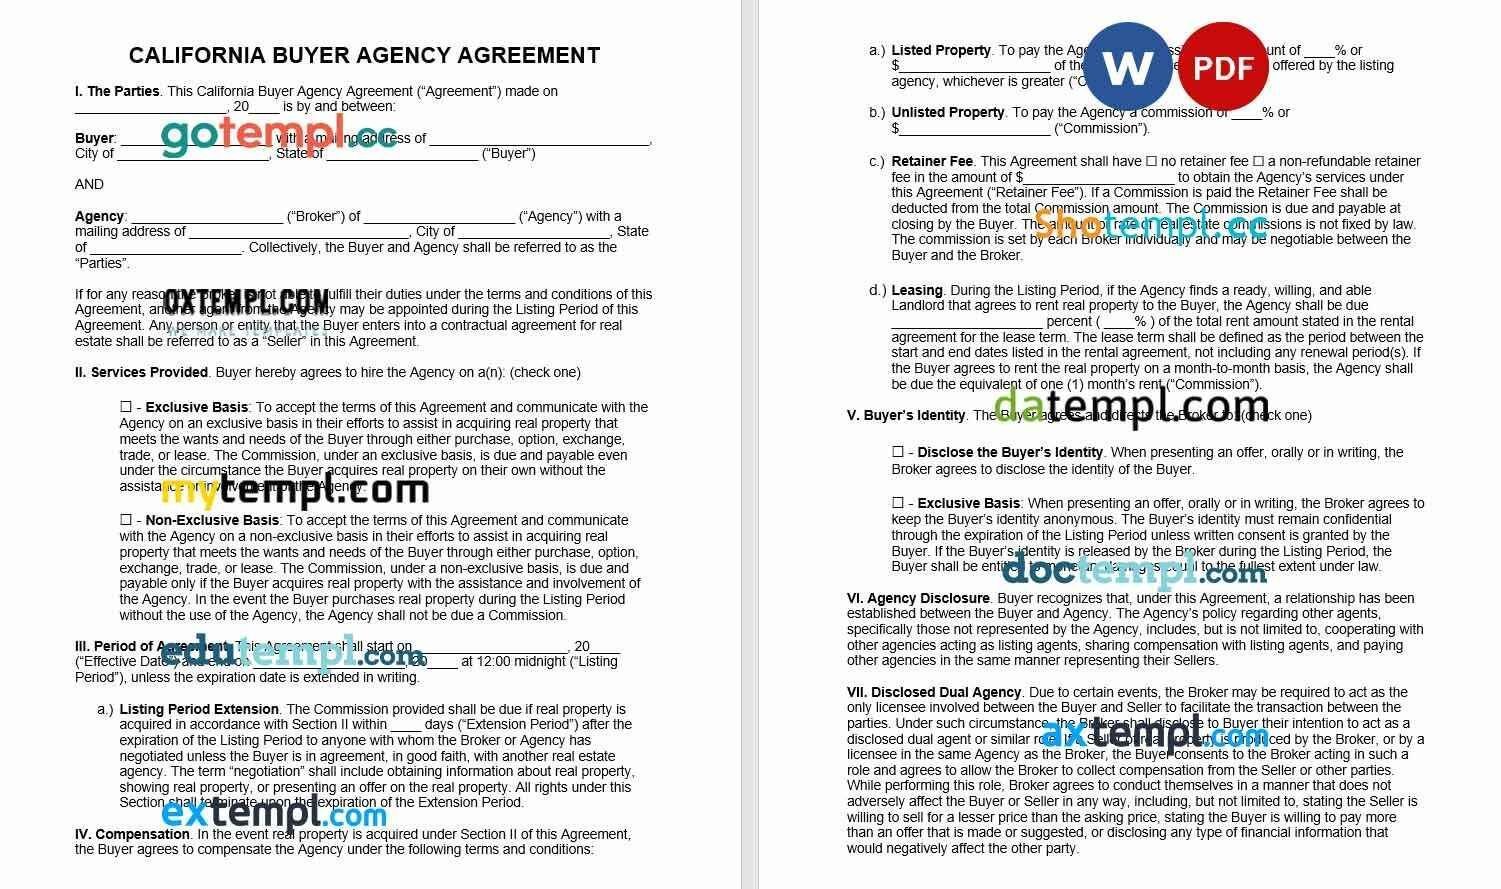 California Buyer Agency Agreement Word example, fully editable